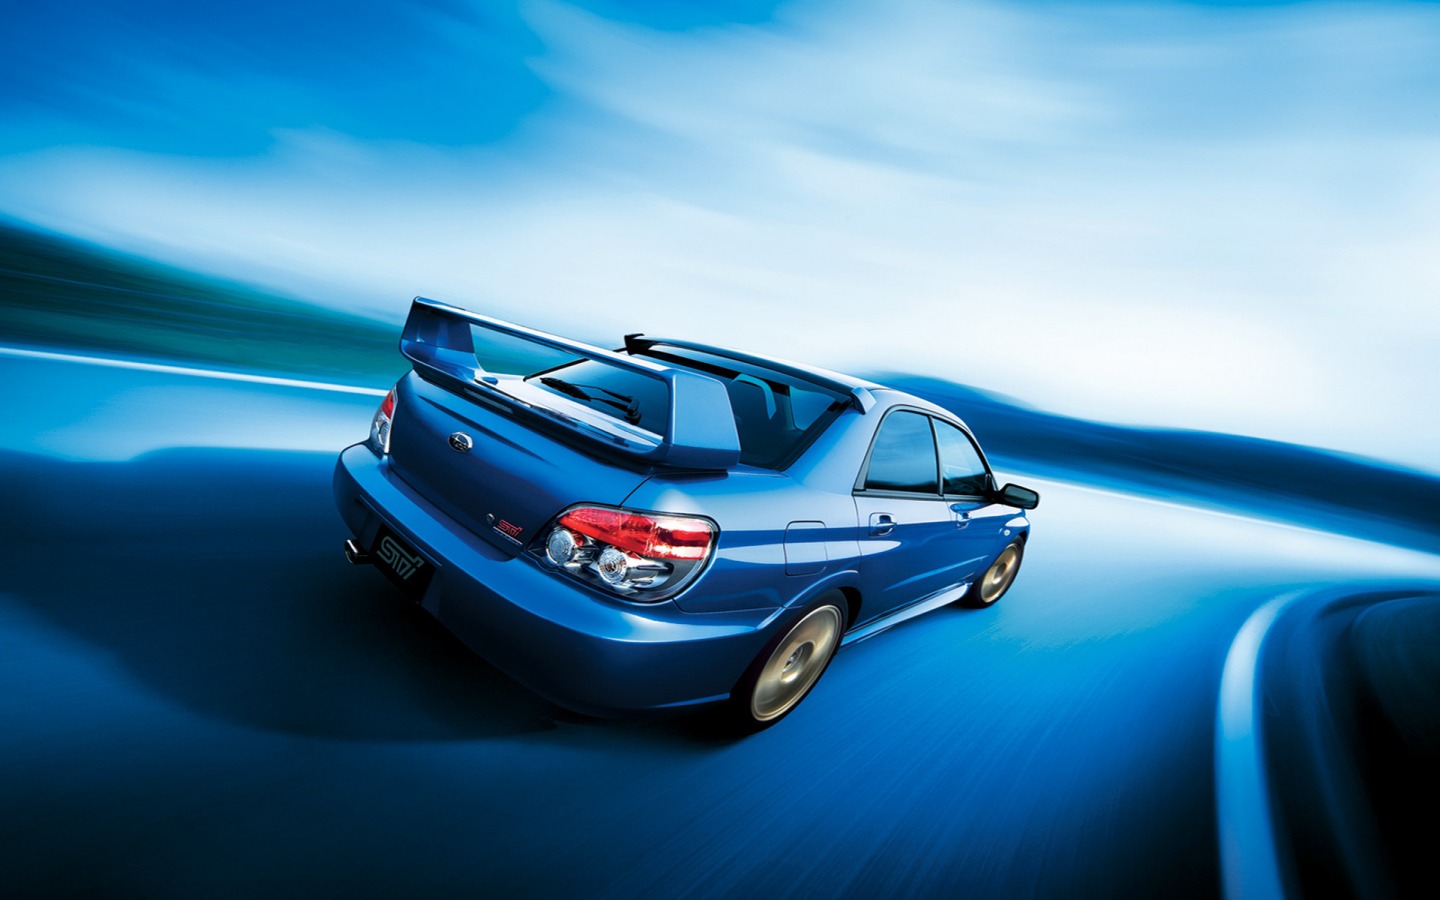 Subaru Impreza Wrx Sti Speed Road Wallpaper Cars In